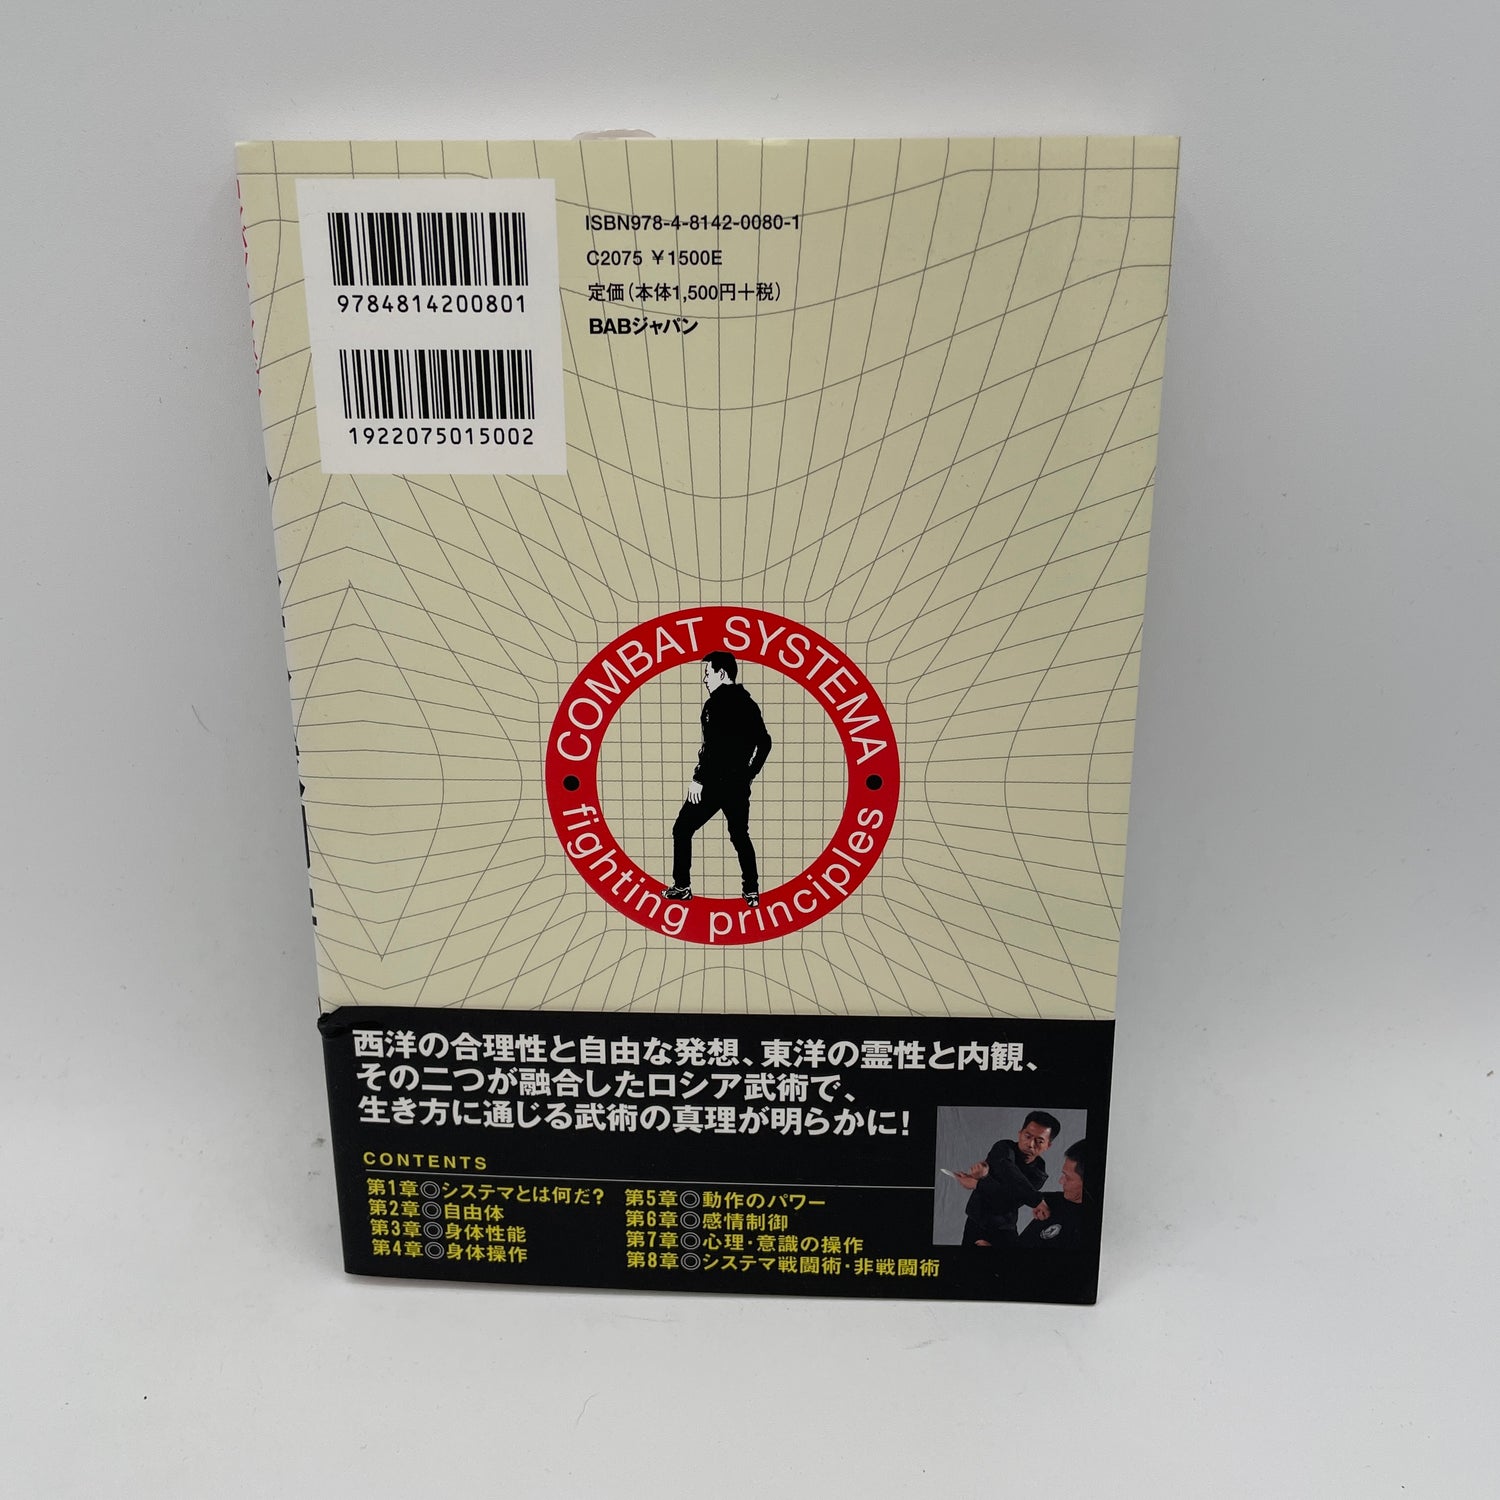 Combat Systema Fighting Principles Book by Mitani Manami